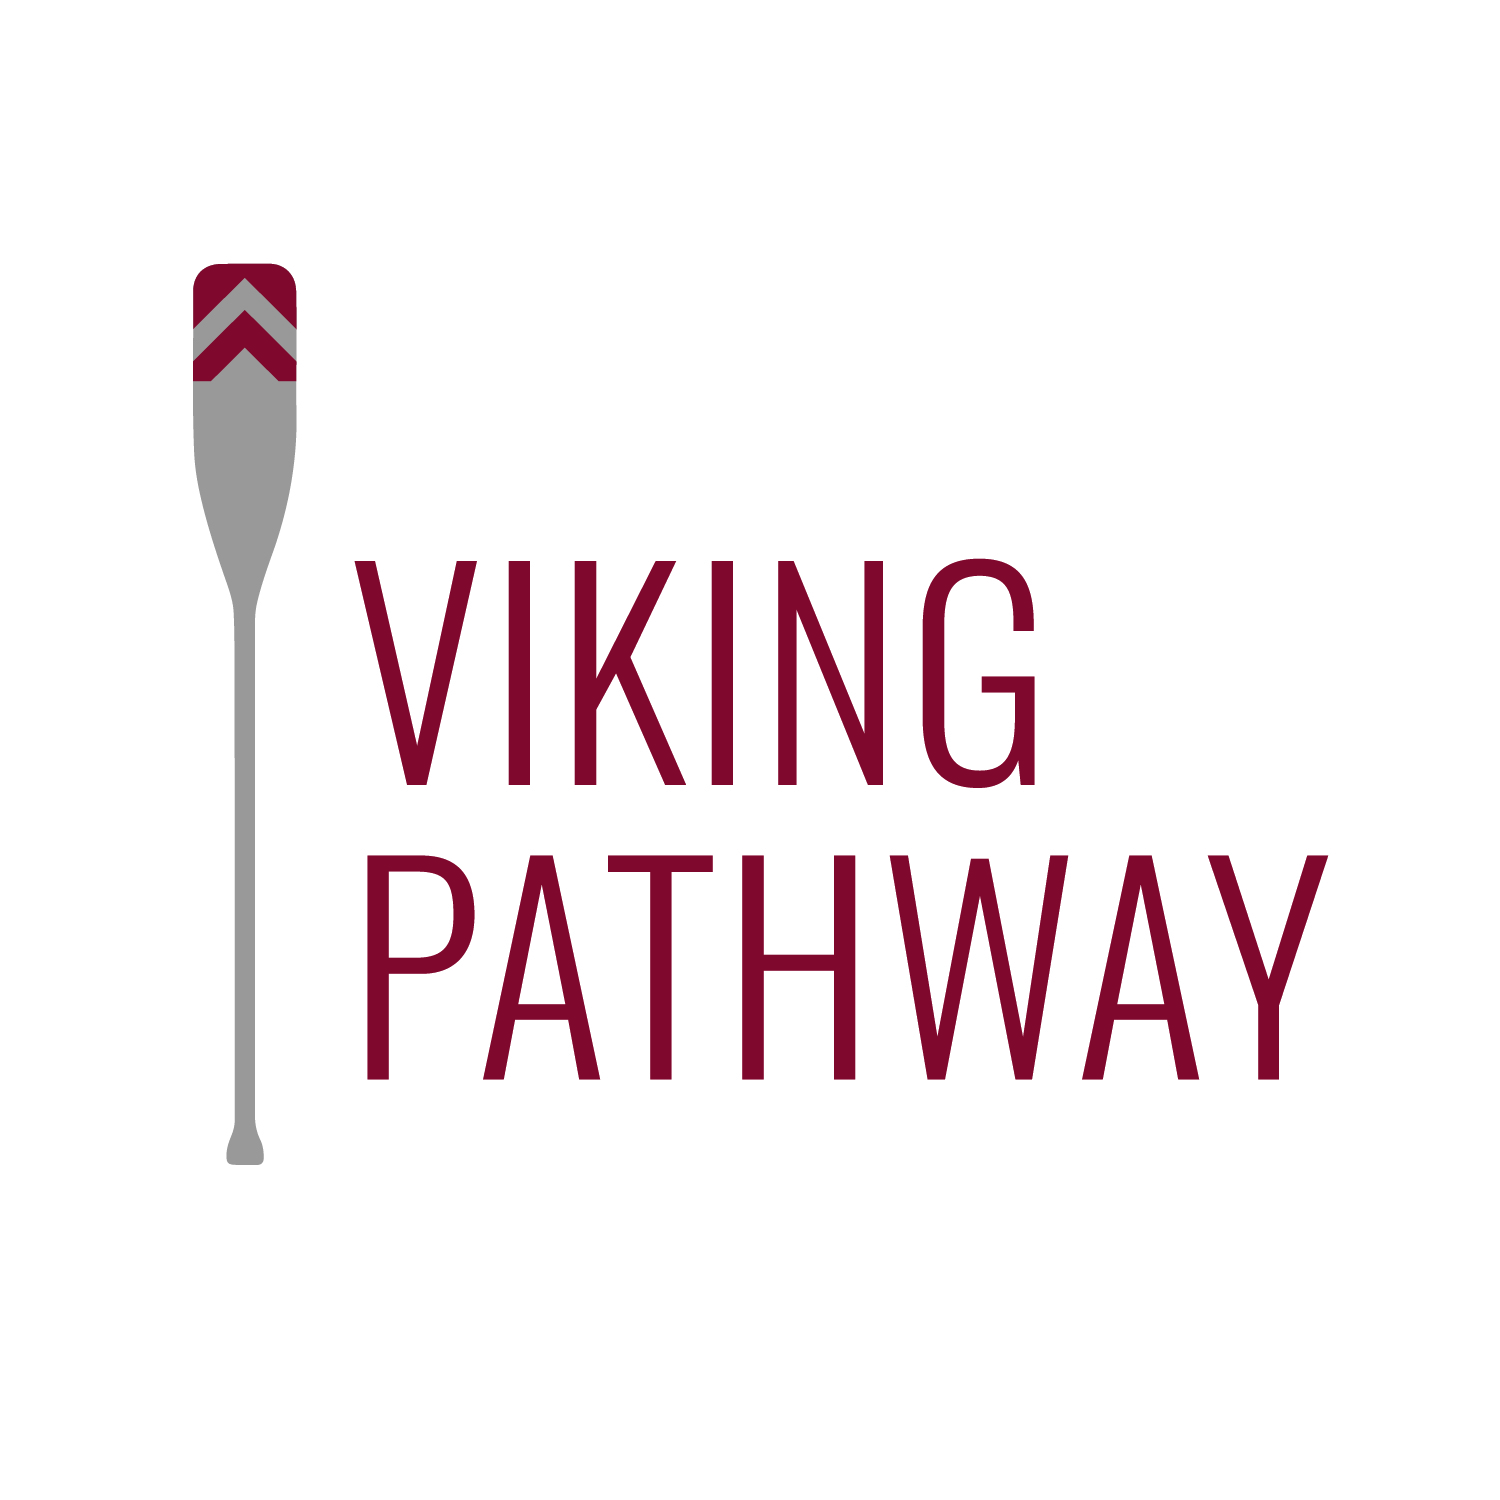 Viking Pathway logo with an oar